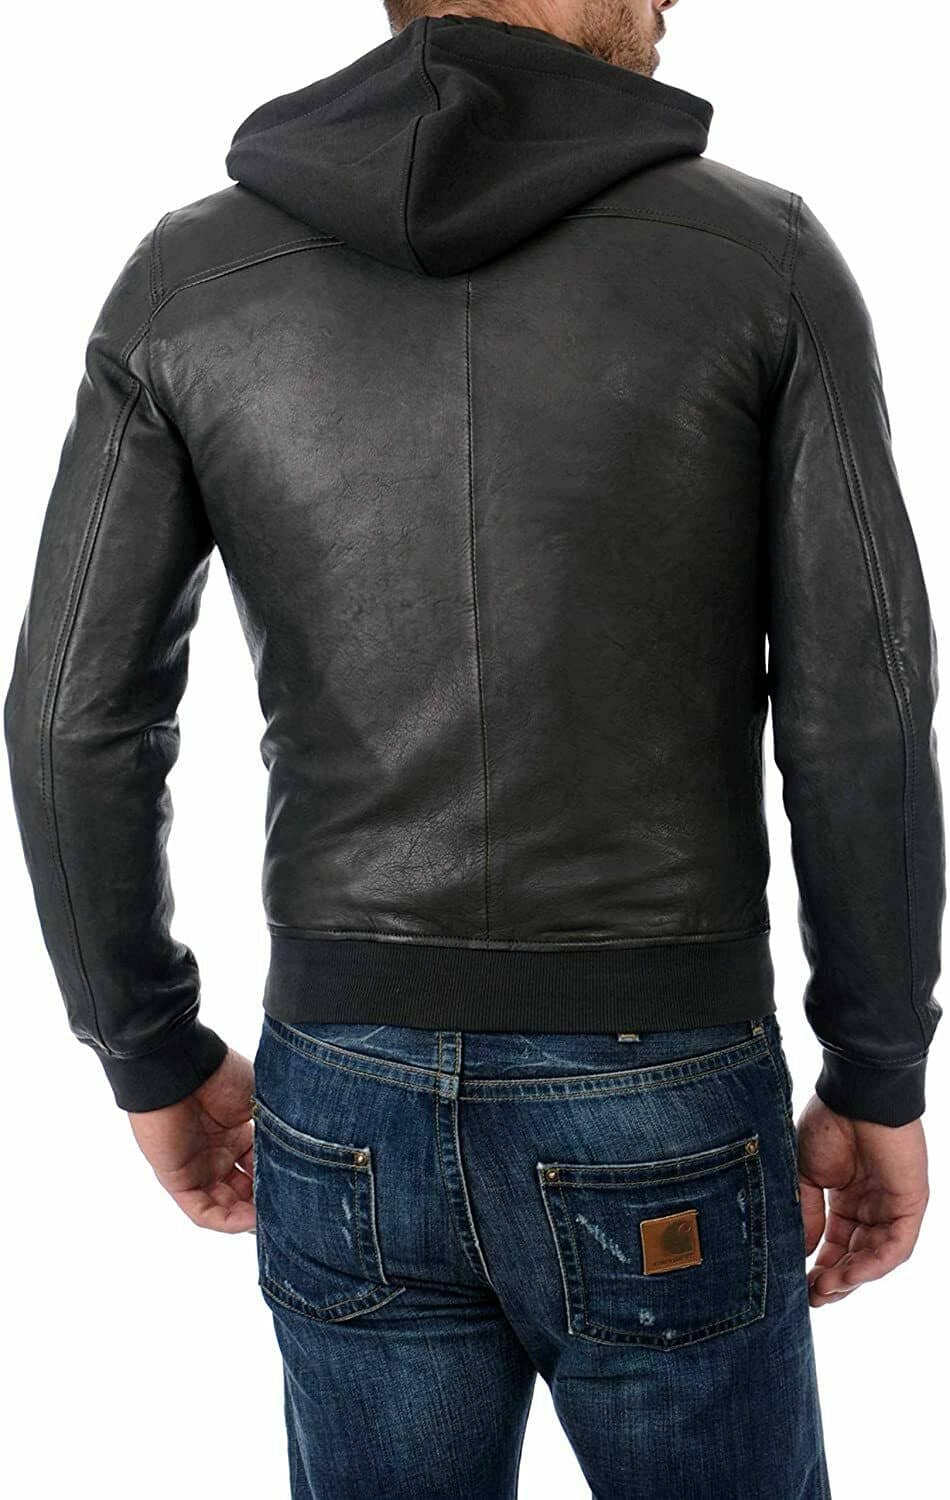 Men’s Lambskin Black Leather Motorcycle Jacket - MBLJ